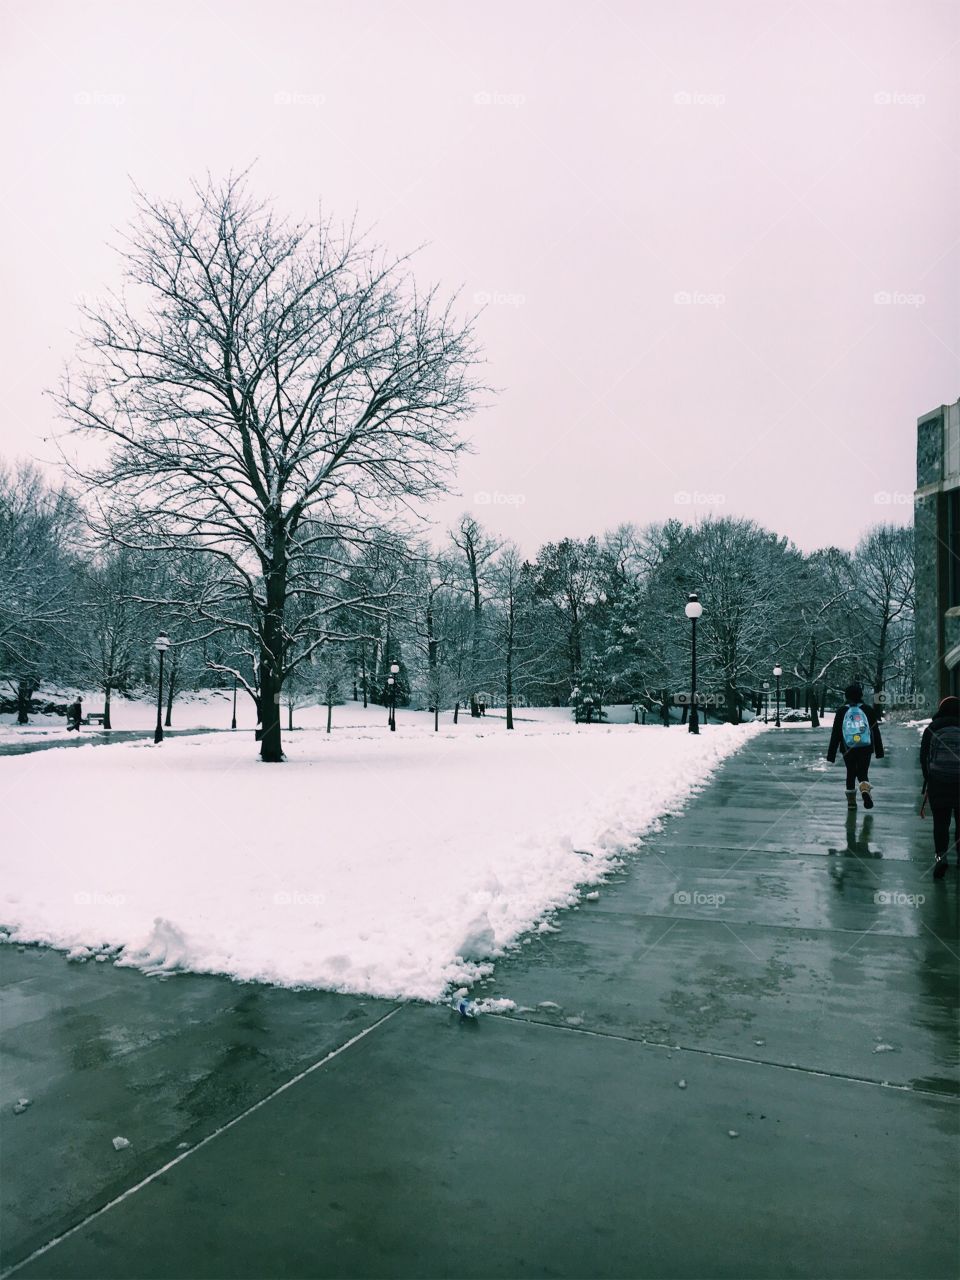 Campus strolls in the snow